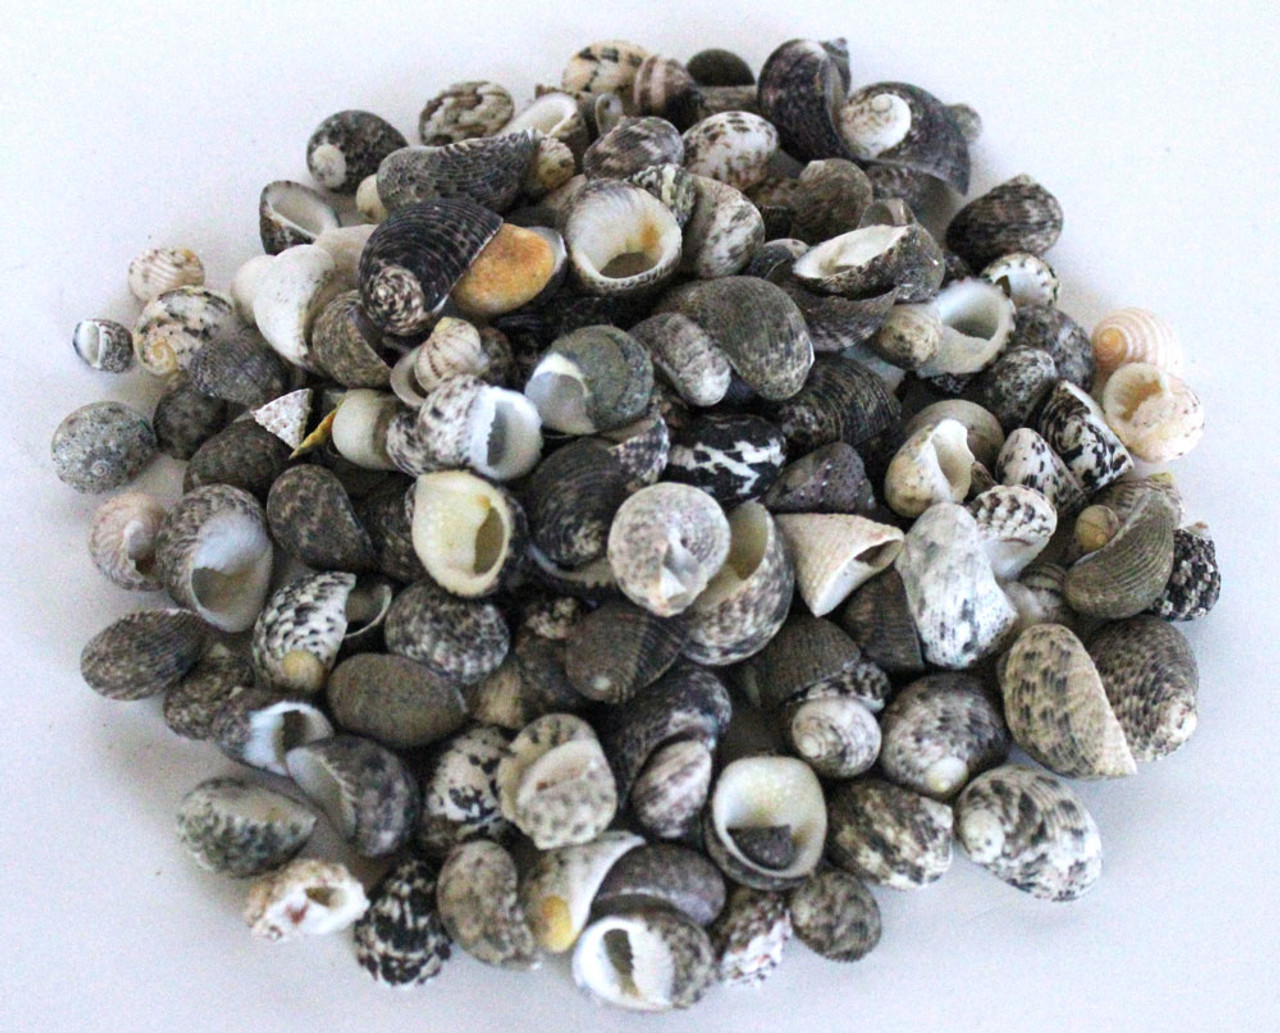 Neritina Decorative Craft Seashells - Nerite Marine Gastropod